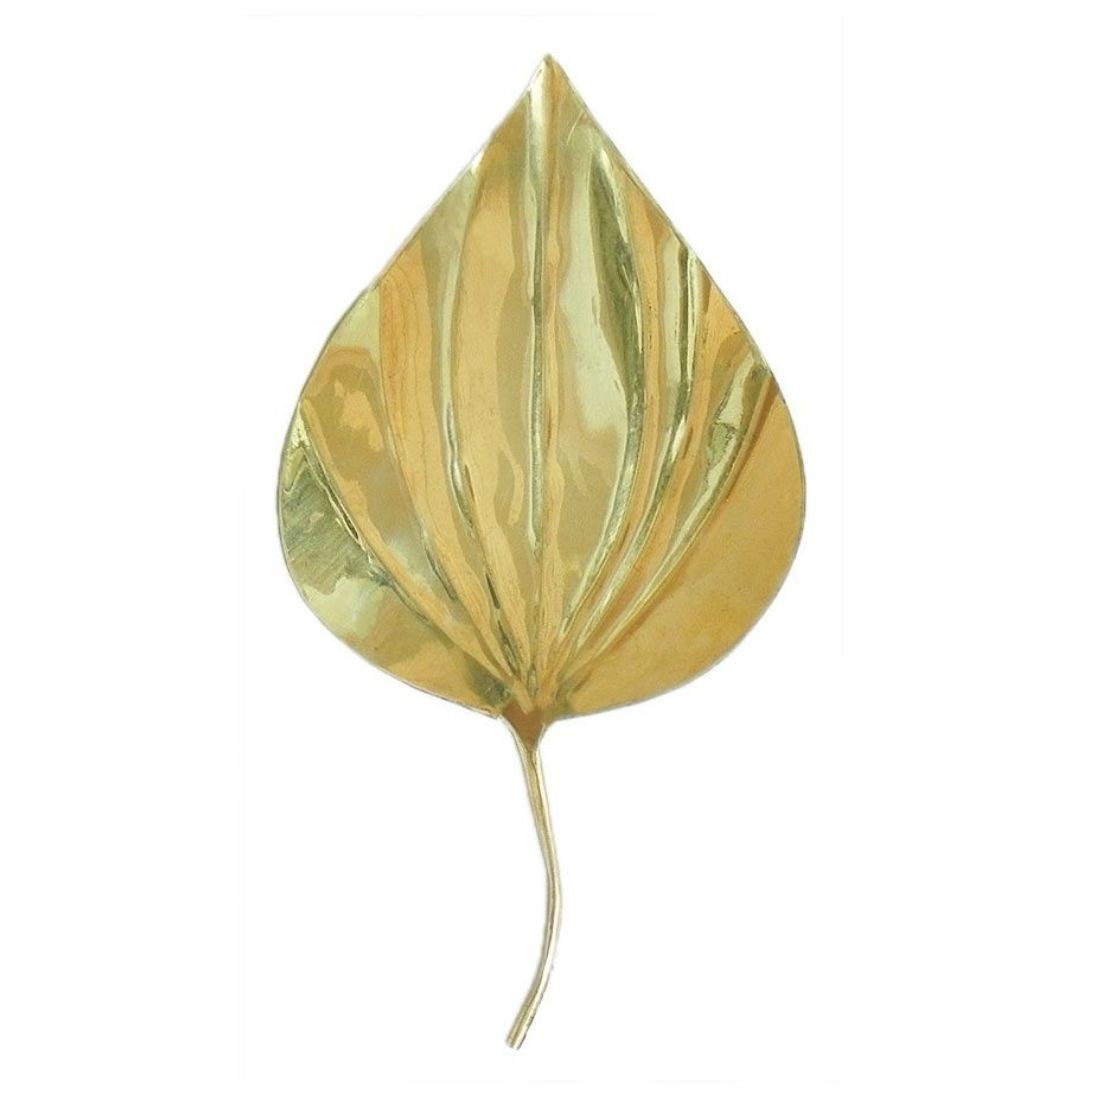 Pan Patta Or Betel Leaf Used In Worship Of Maa Lakshmi Puja